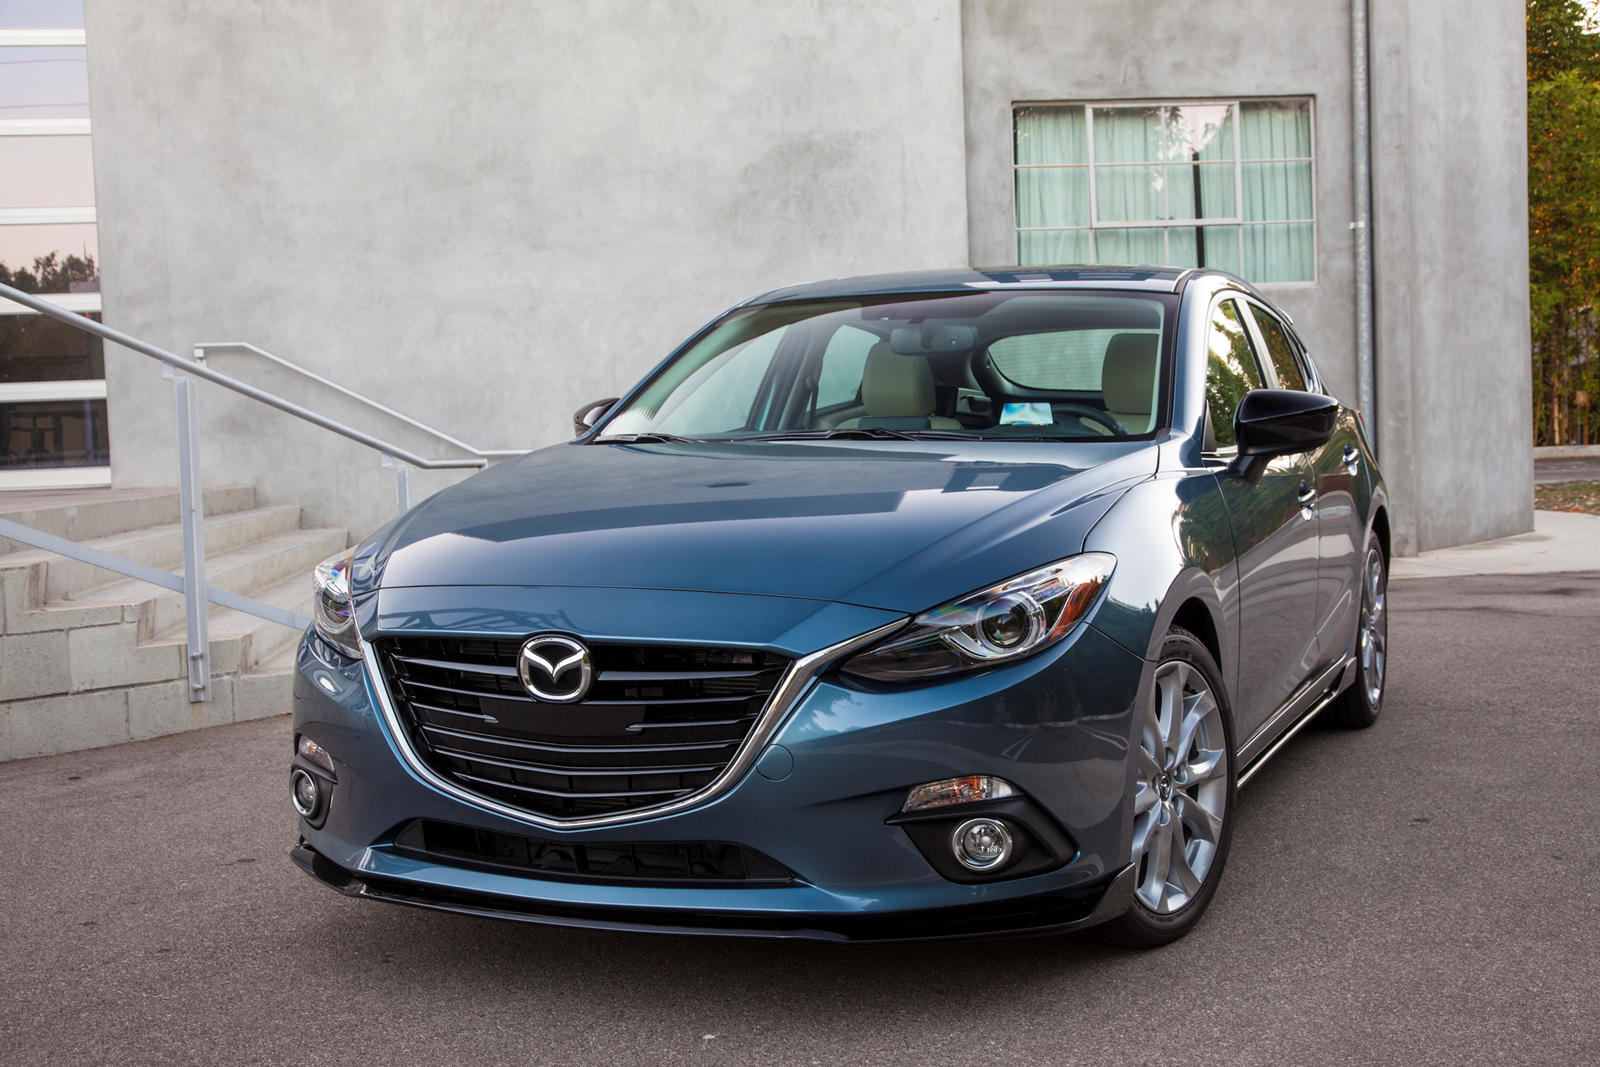 2015 Mazda 3 Hatchback: Review, Trims, Specs, Price, New Interior